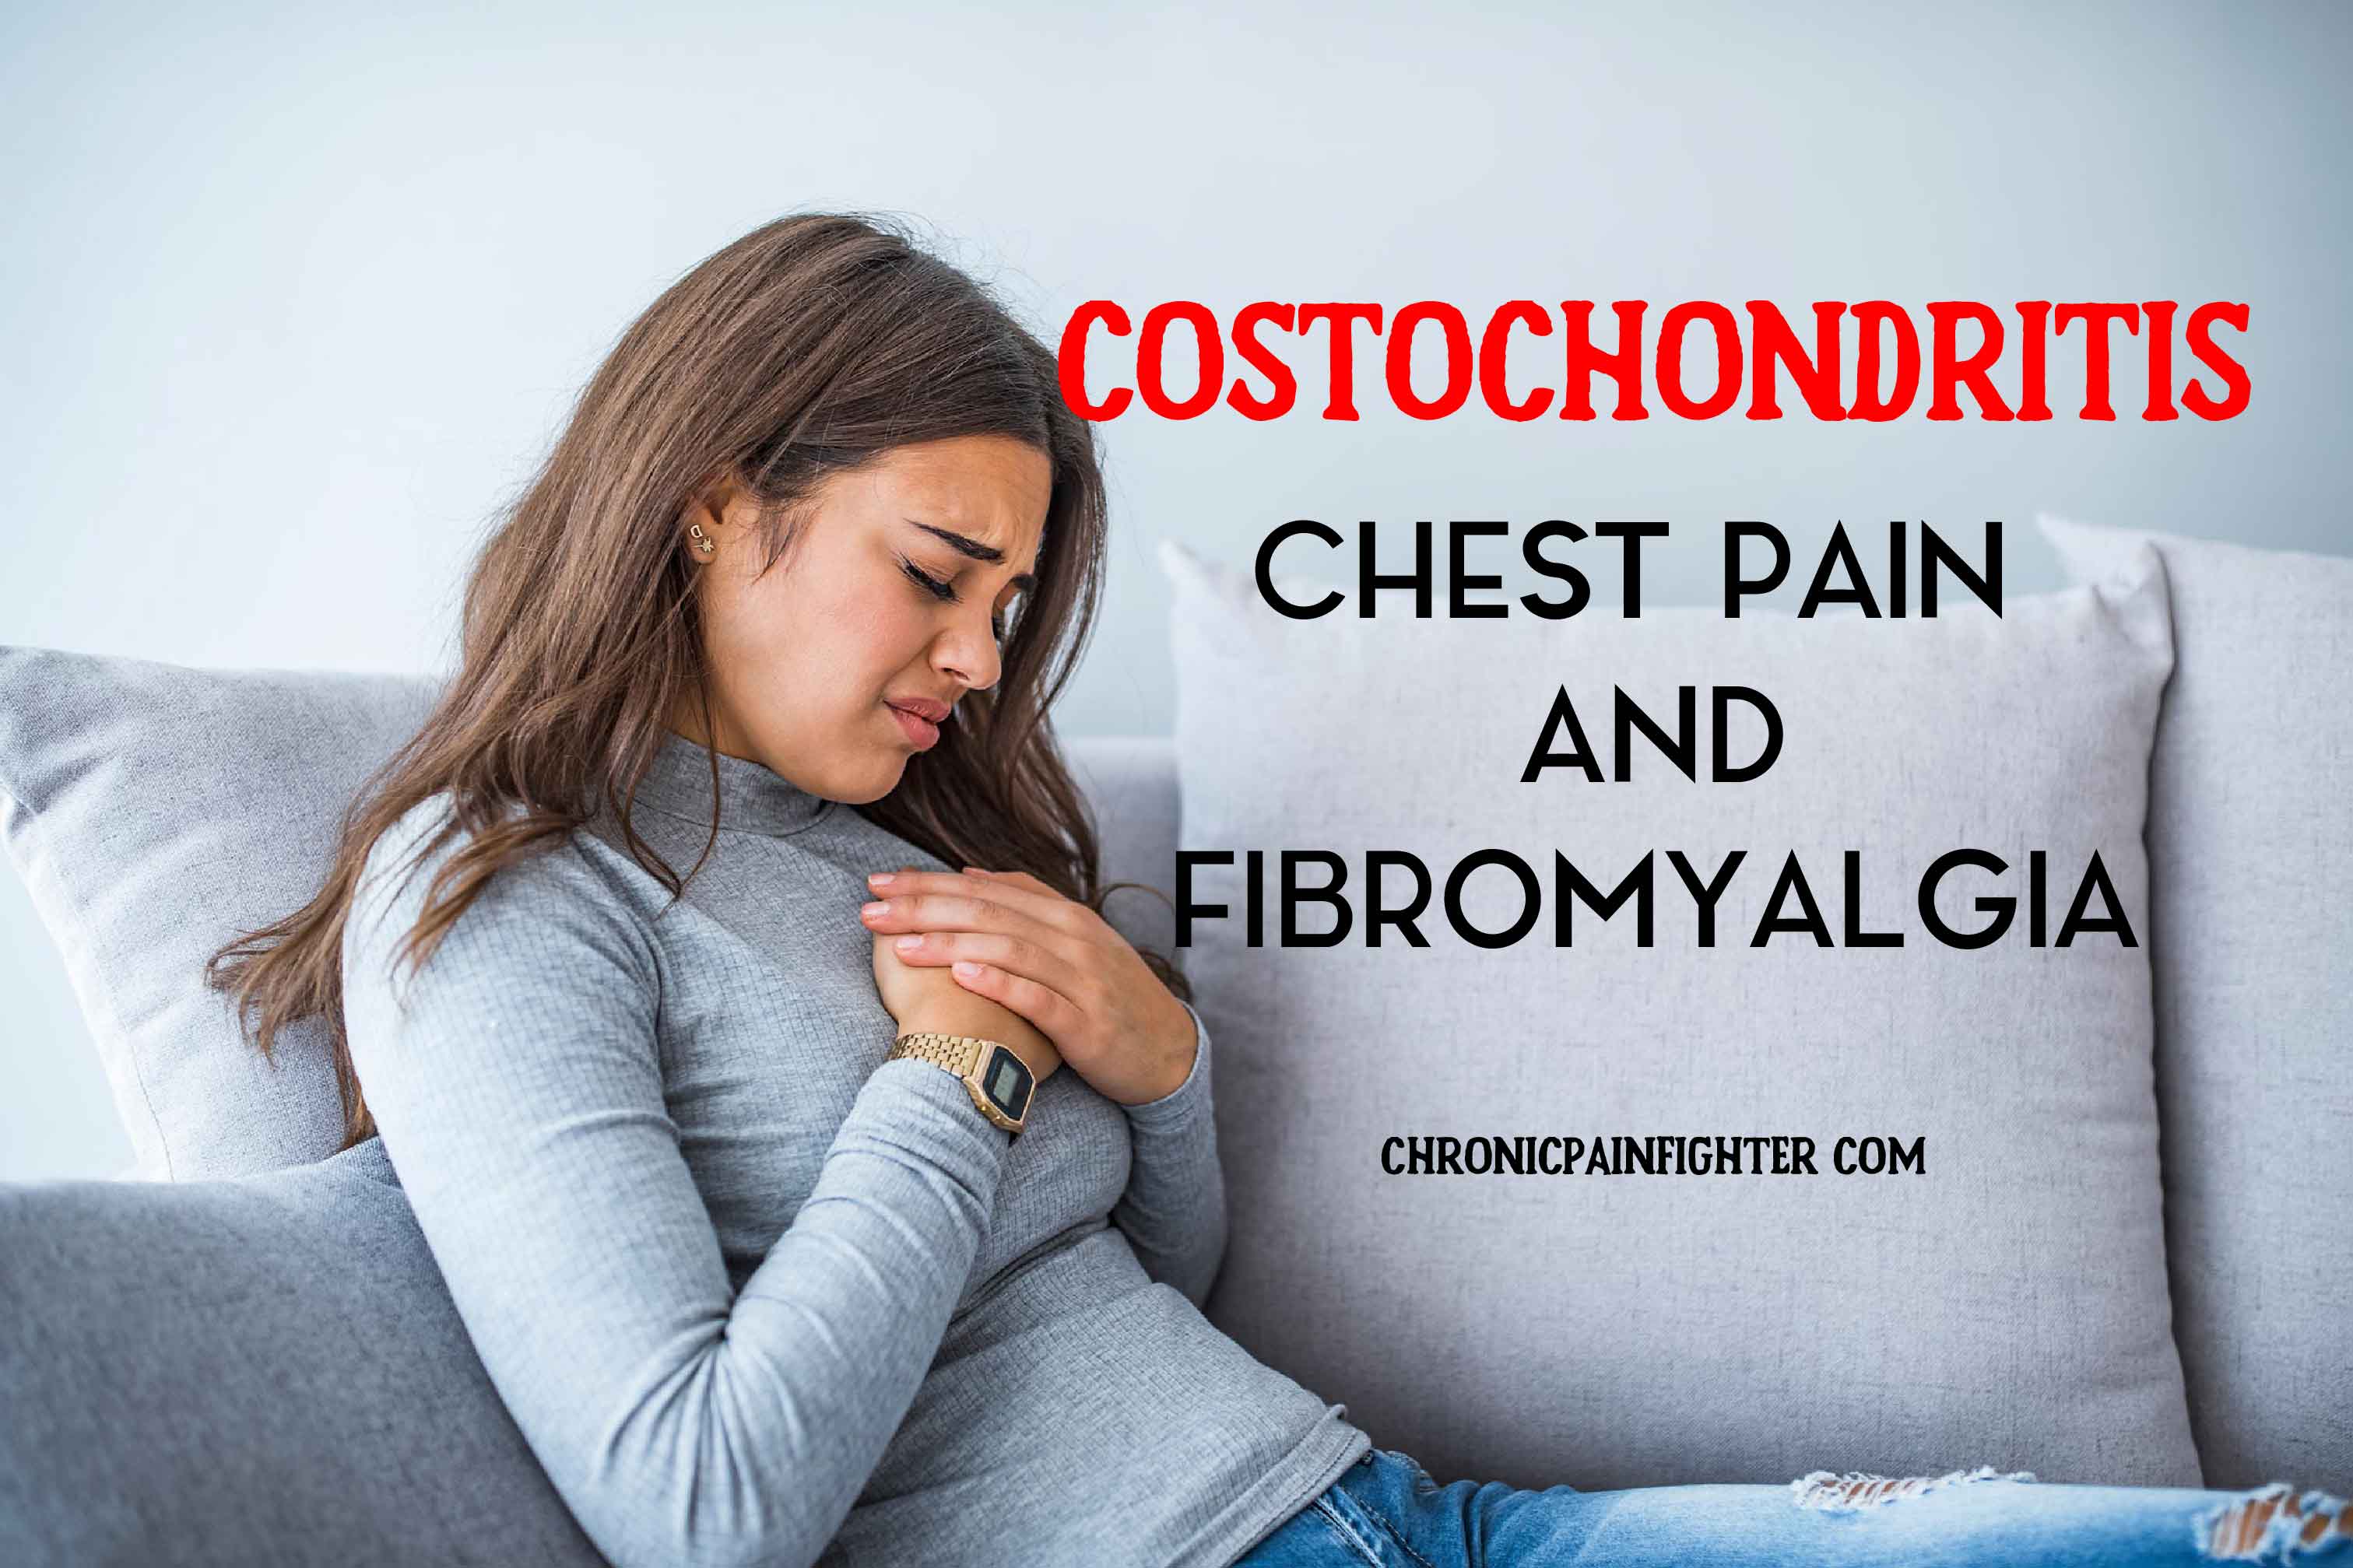 Costochondritis: Chest pain and fibromyalgia